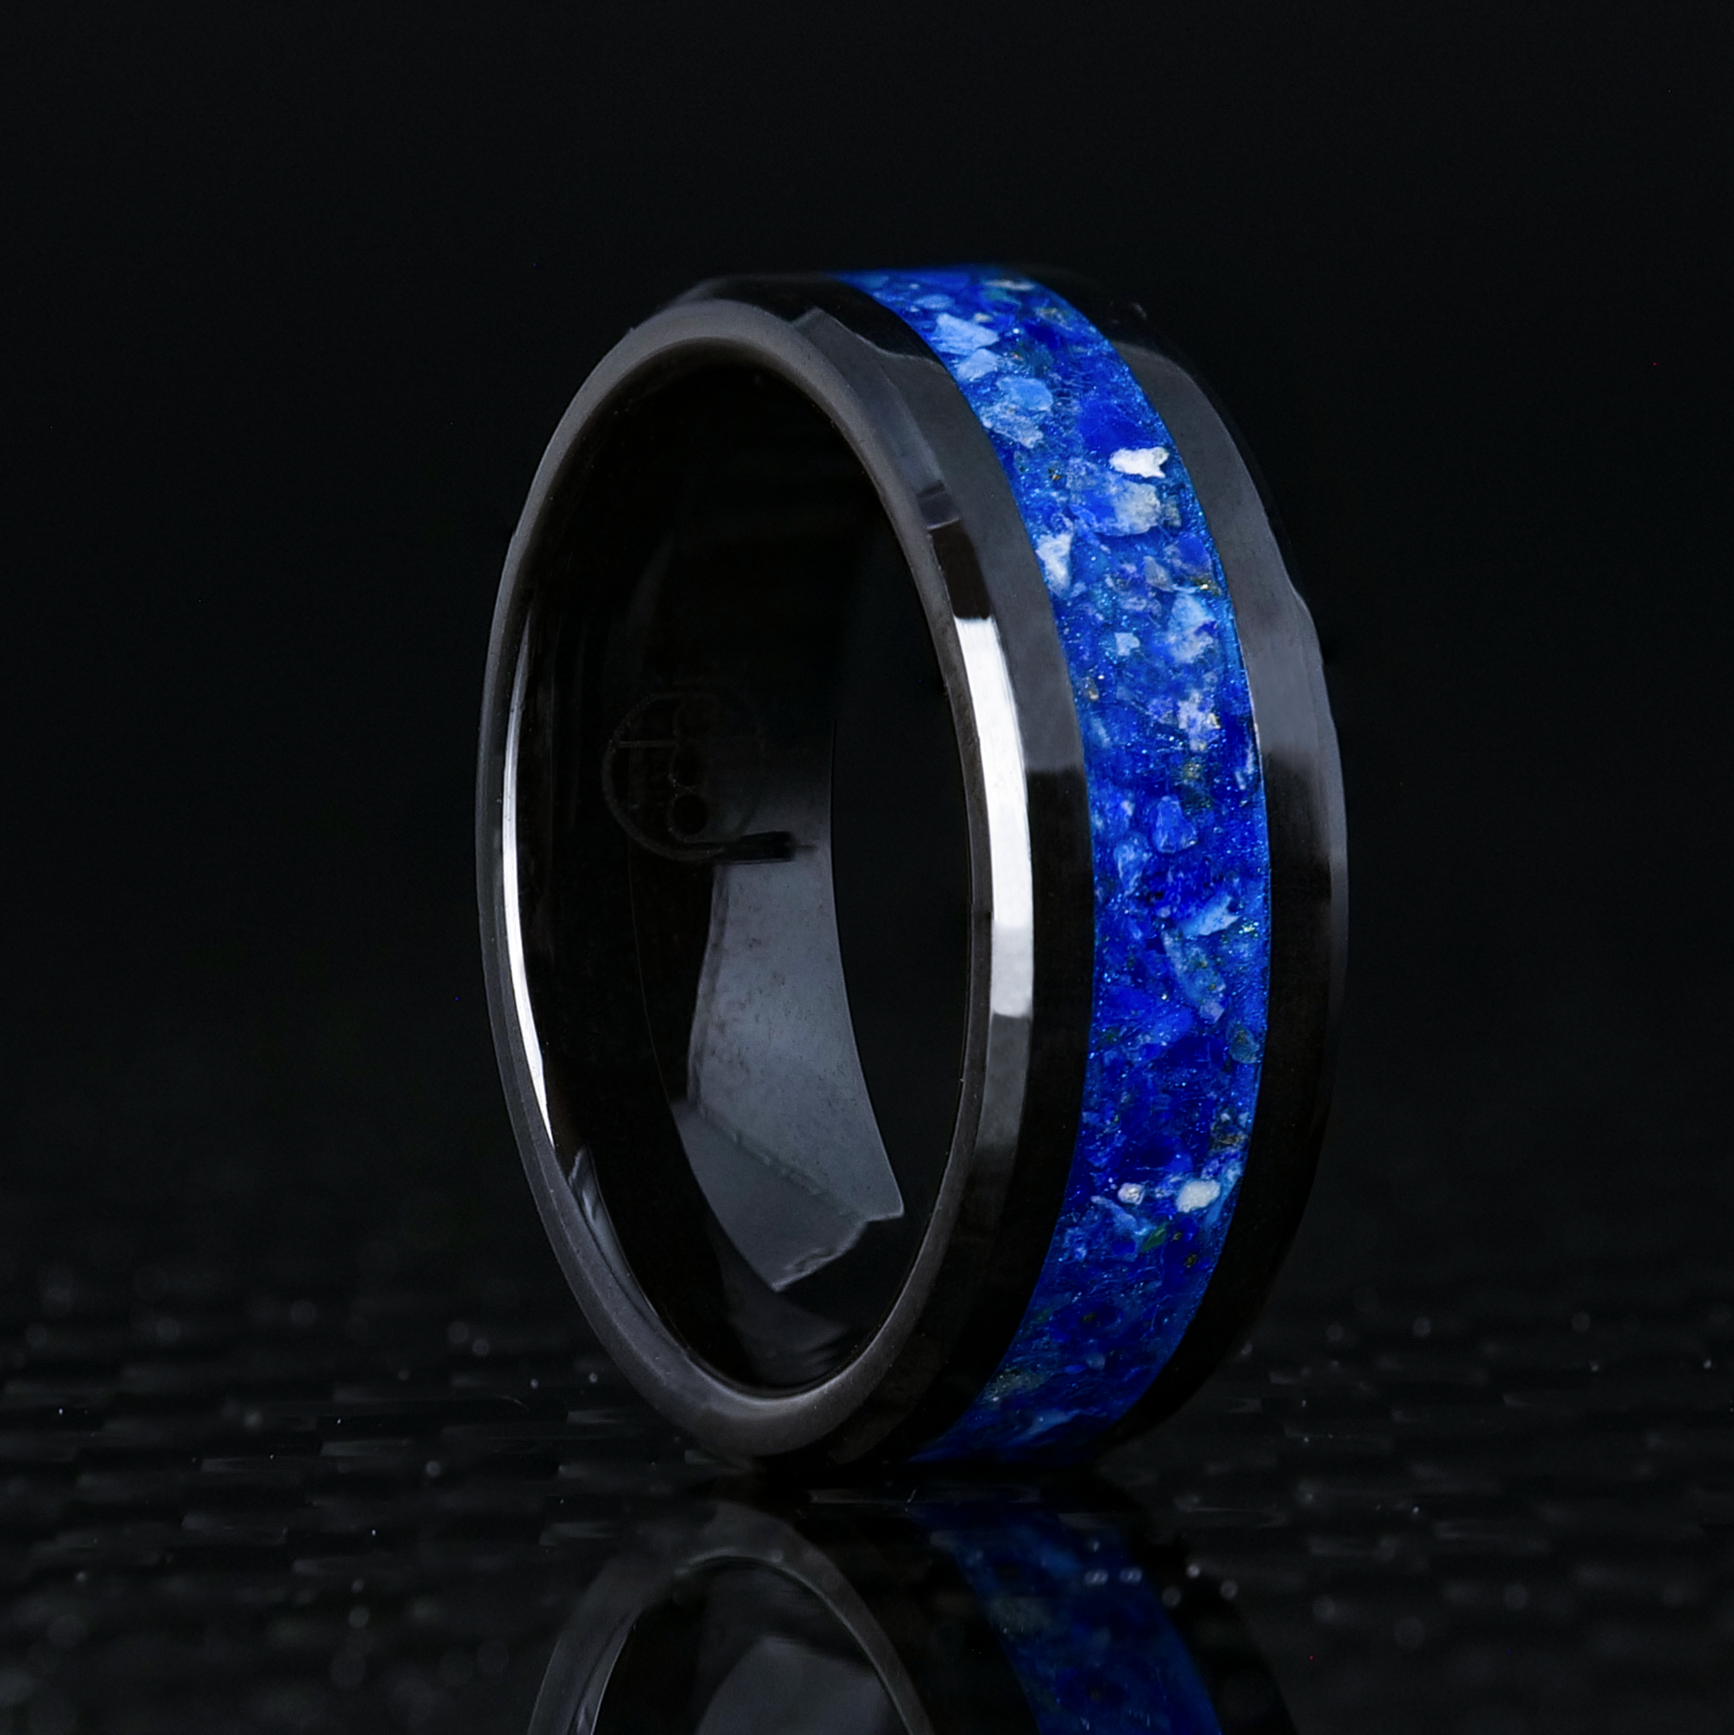 Ring Black Adair Designs Lazuli Glowstone Patrick on Ceramic Lapis |